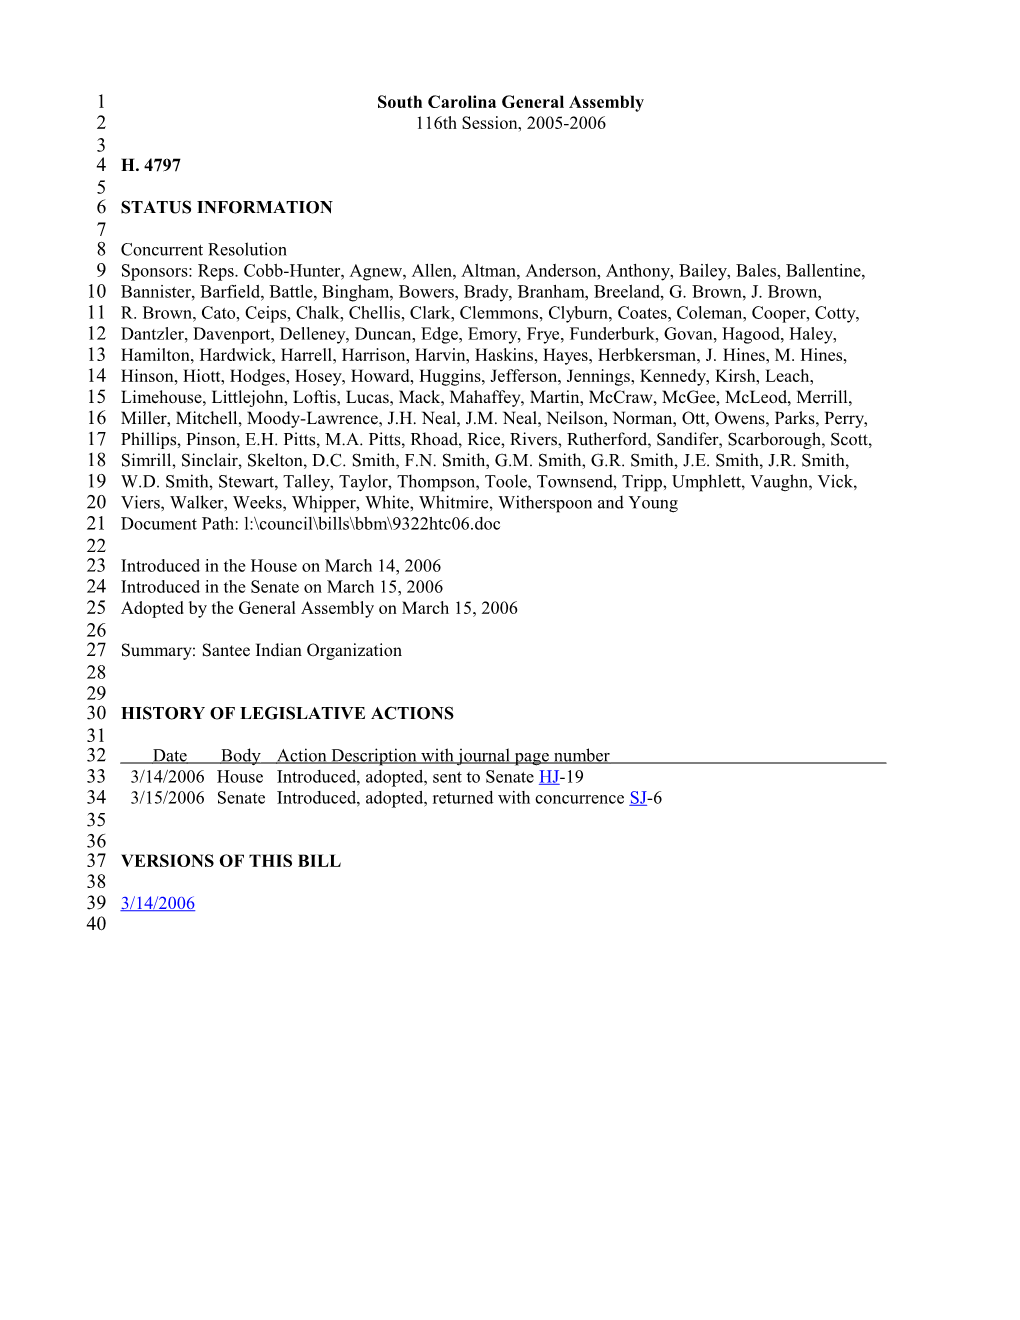 2005-2006 Bill 4797: Santee Indian Organization - South Carolina Legislature Online